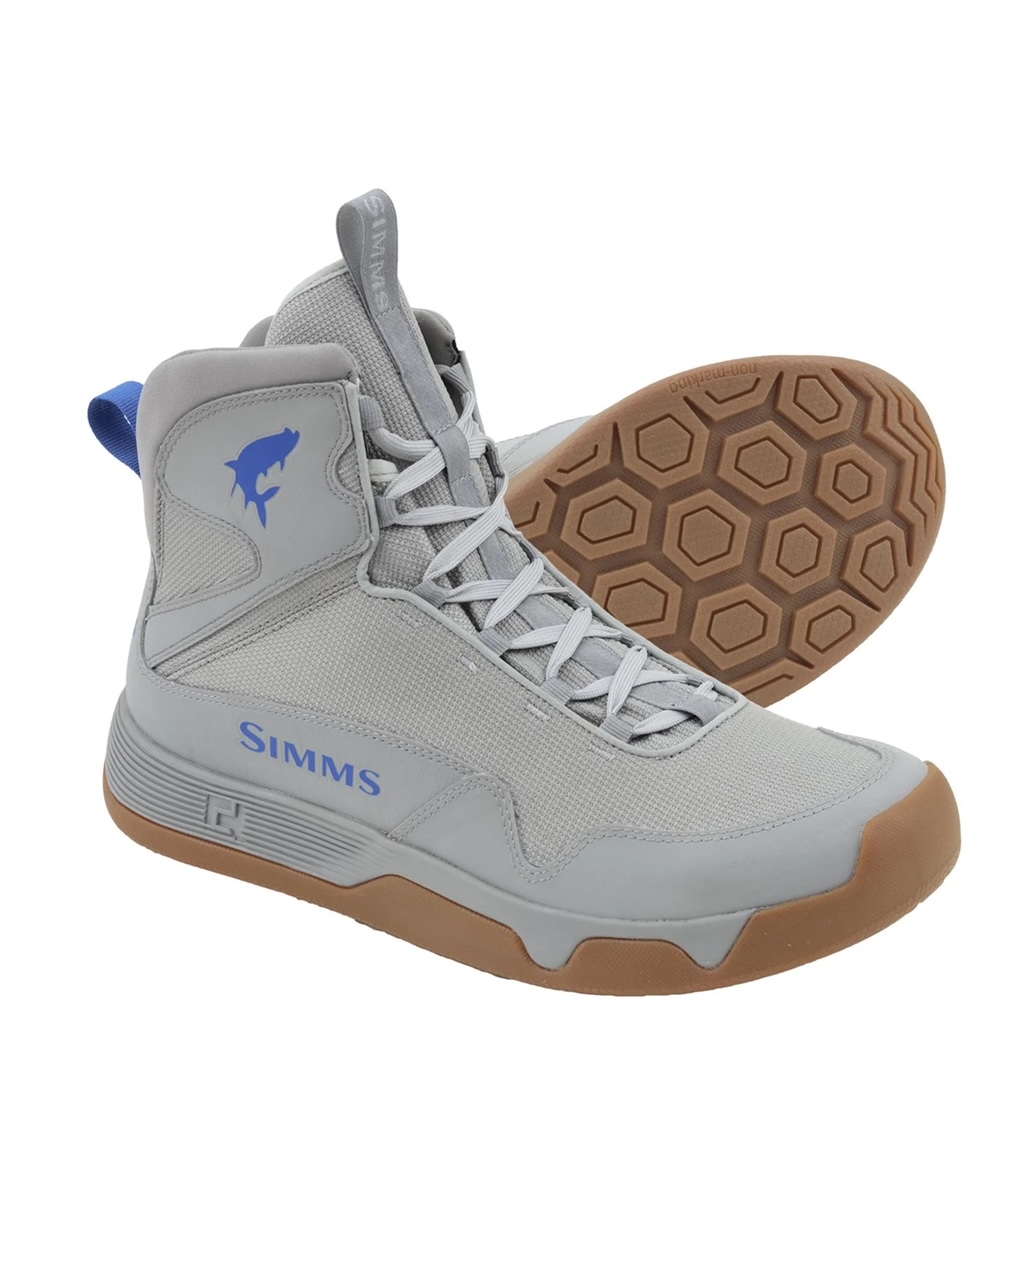 Simms Flats Sneaker - Size 14